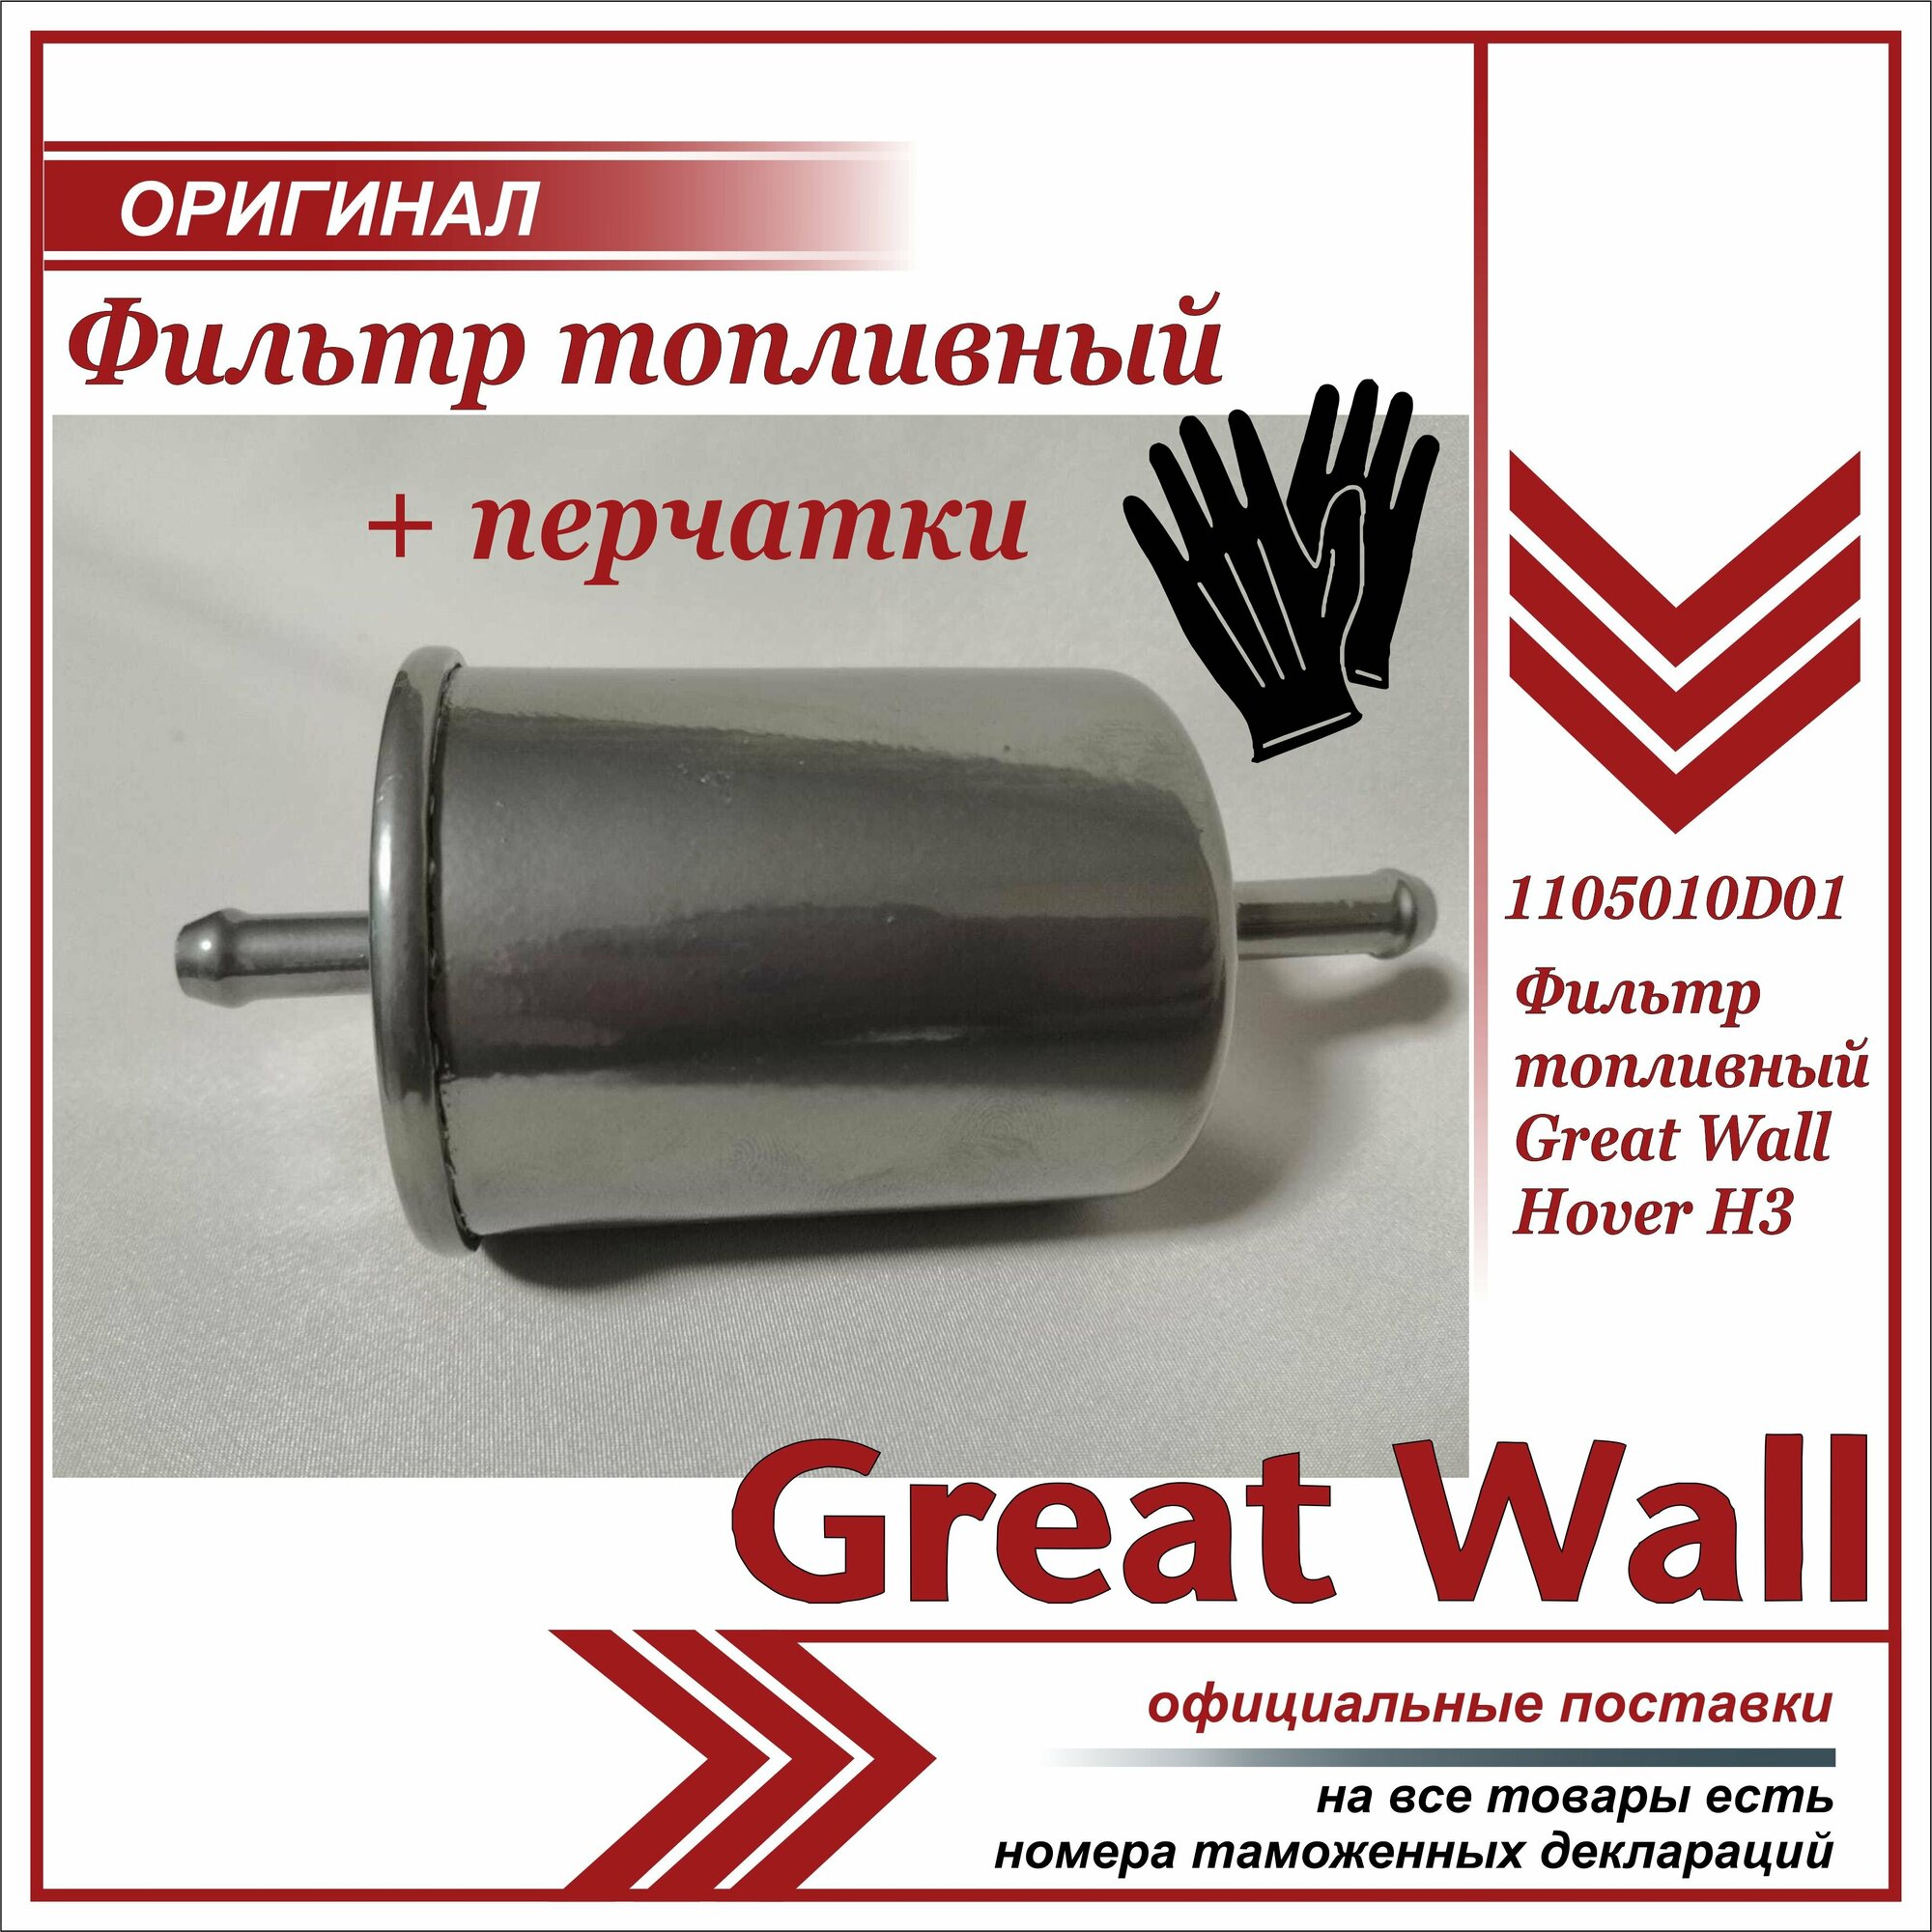 Фильтр топливный Грейт Вул Ховер Н3  Great Wall Hover H3 1105010D01 + пара перчаток в комплекте